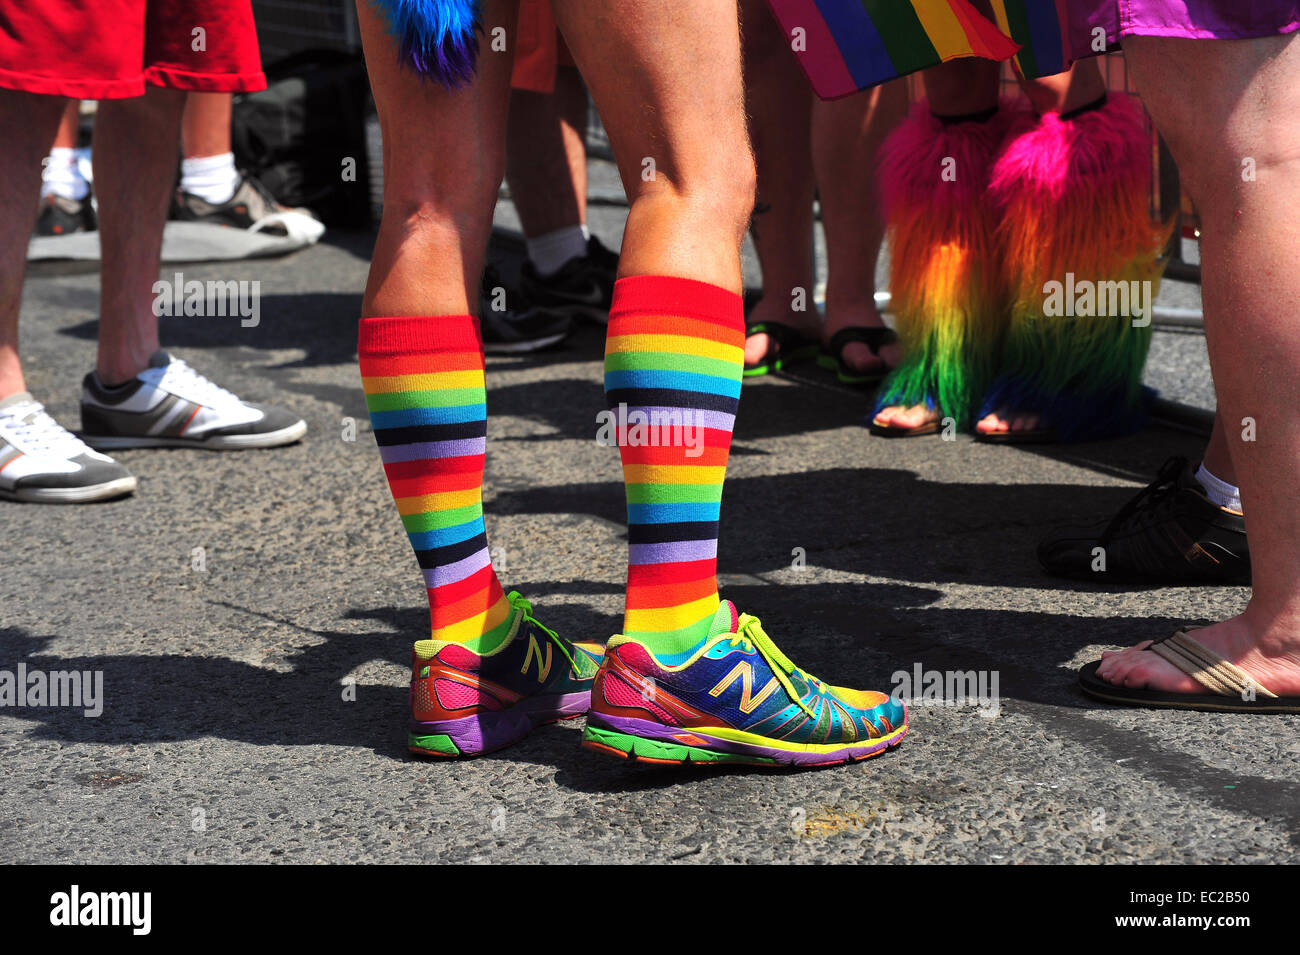 Pride socks -Fotos und -Bildmaterial in hoher Auflösung – Alamy